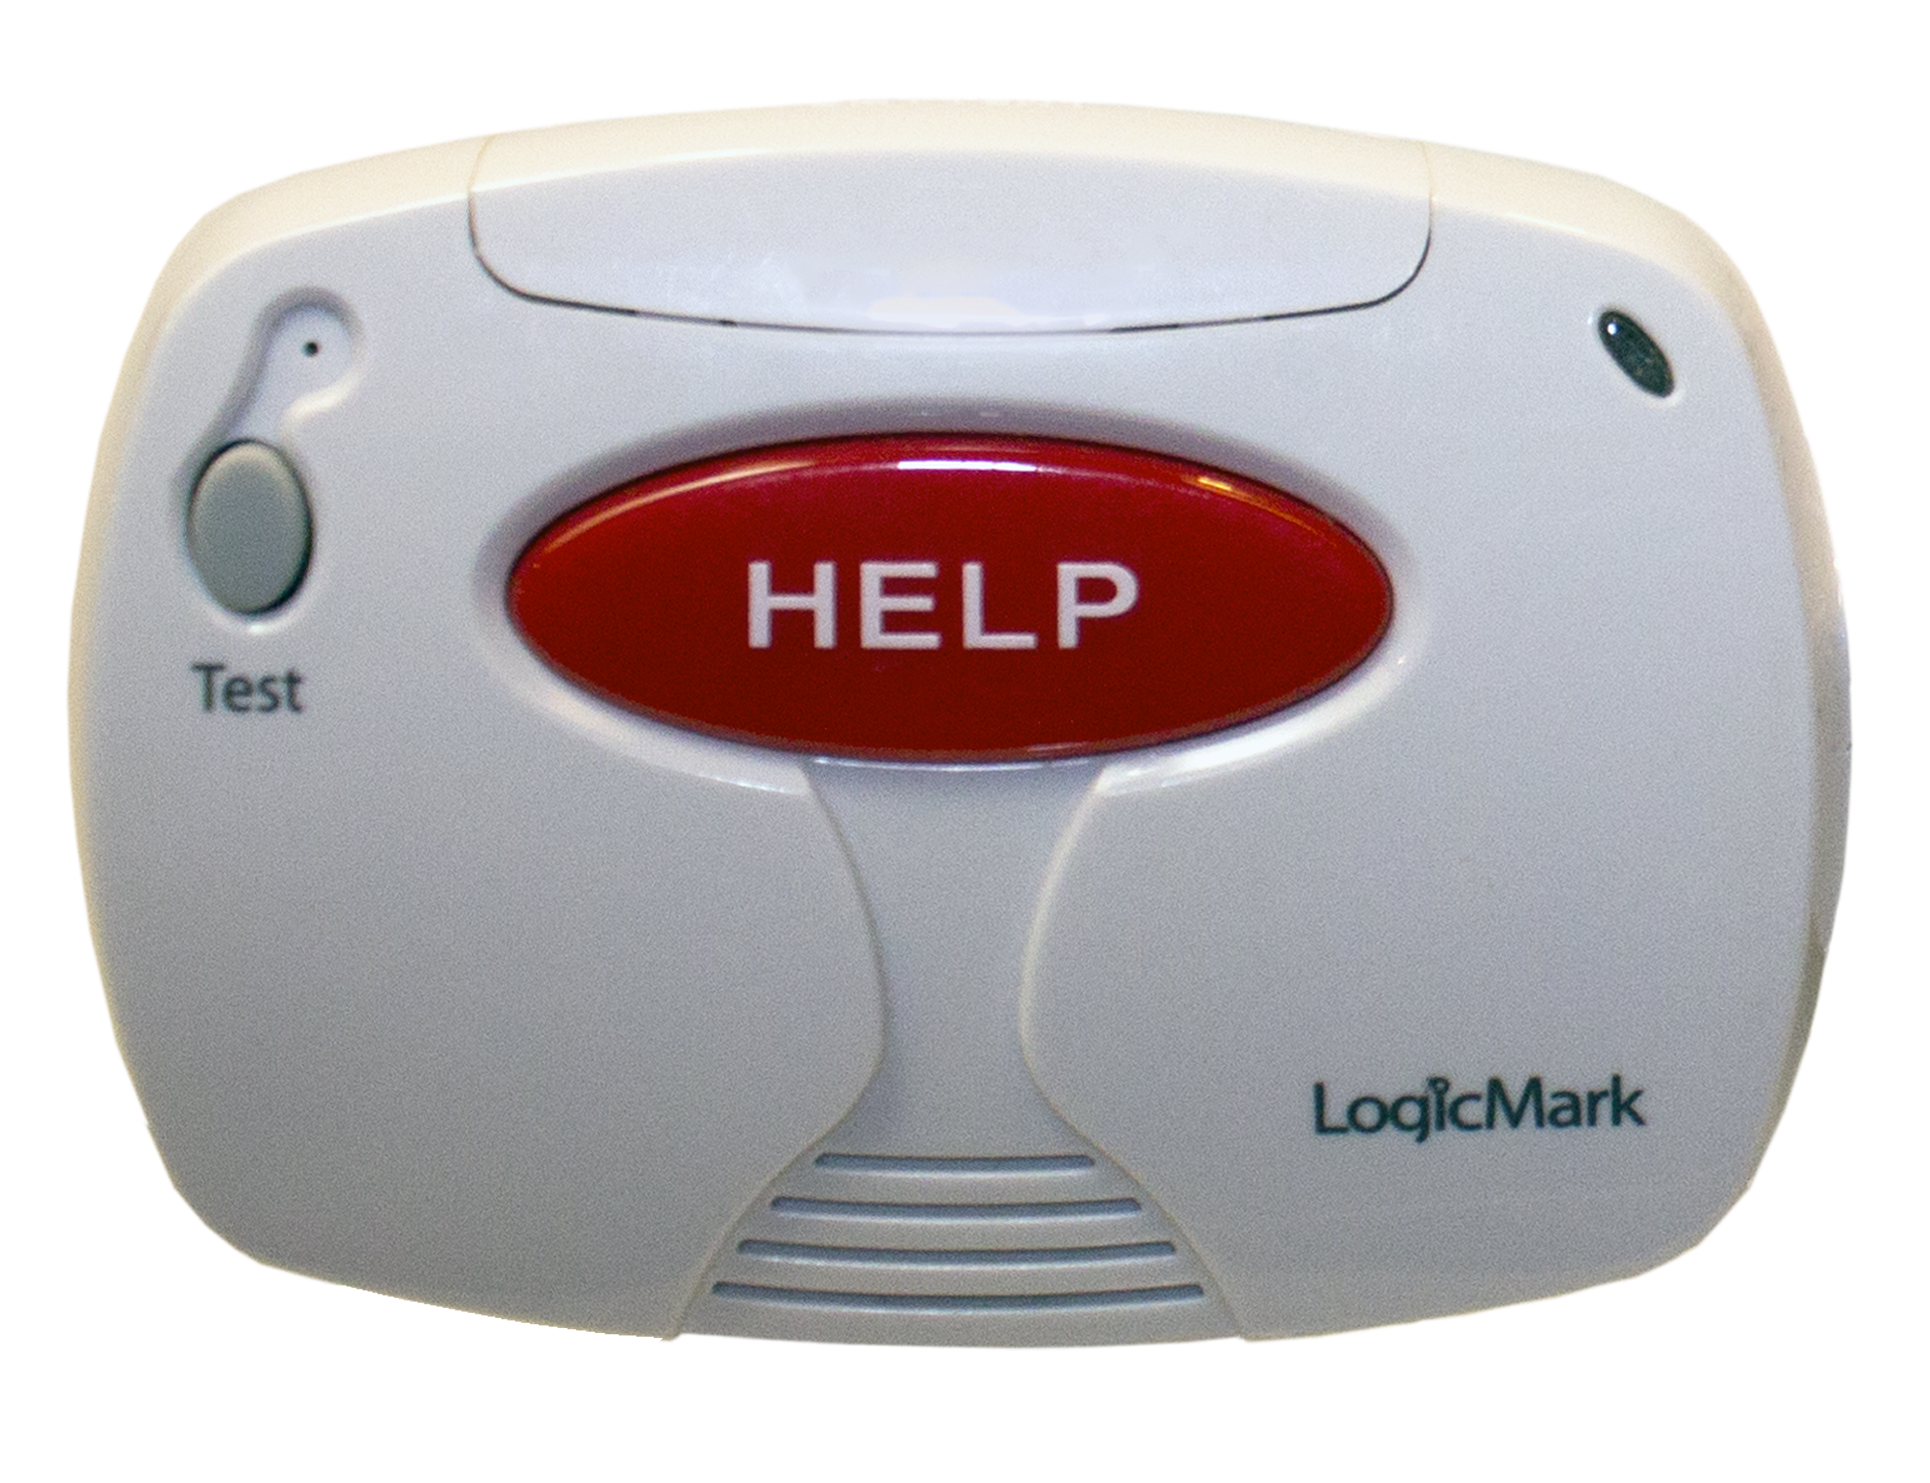 LogicMark Freedom Alert Emergency System, 1 Count - image 4 of 5